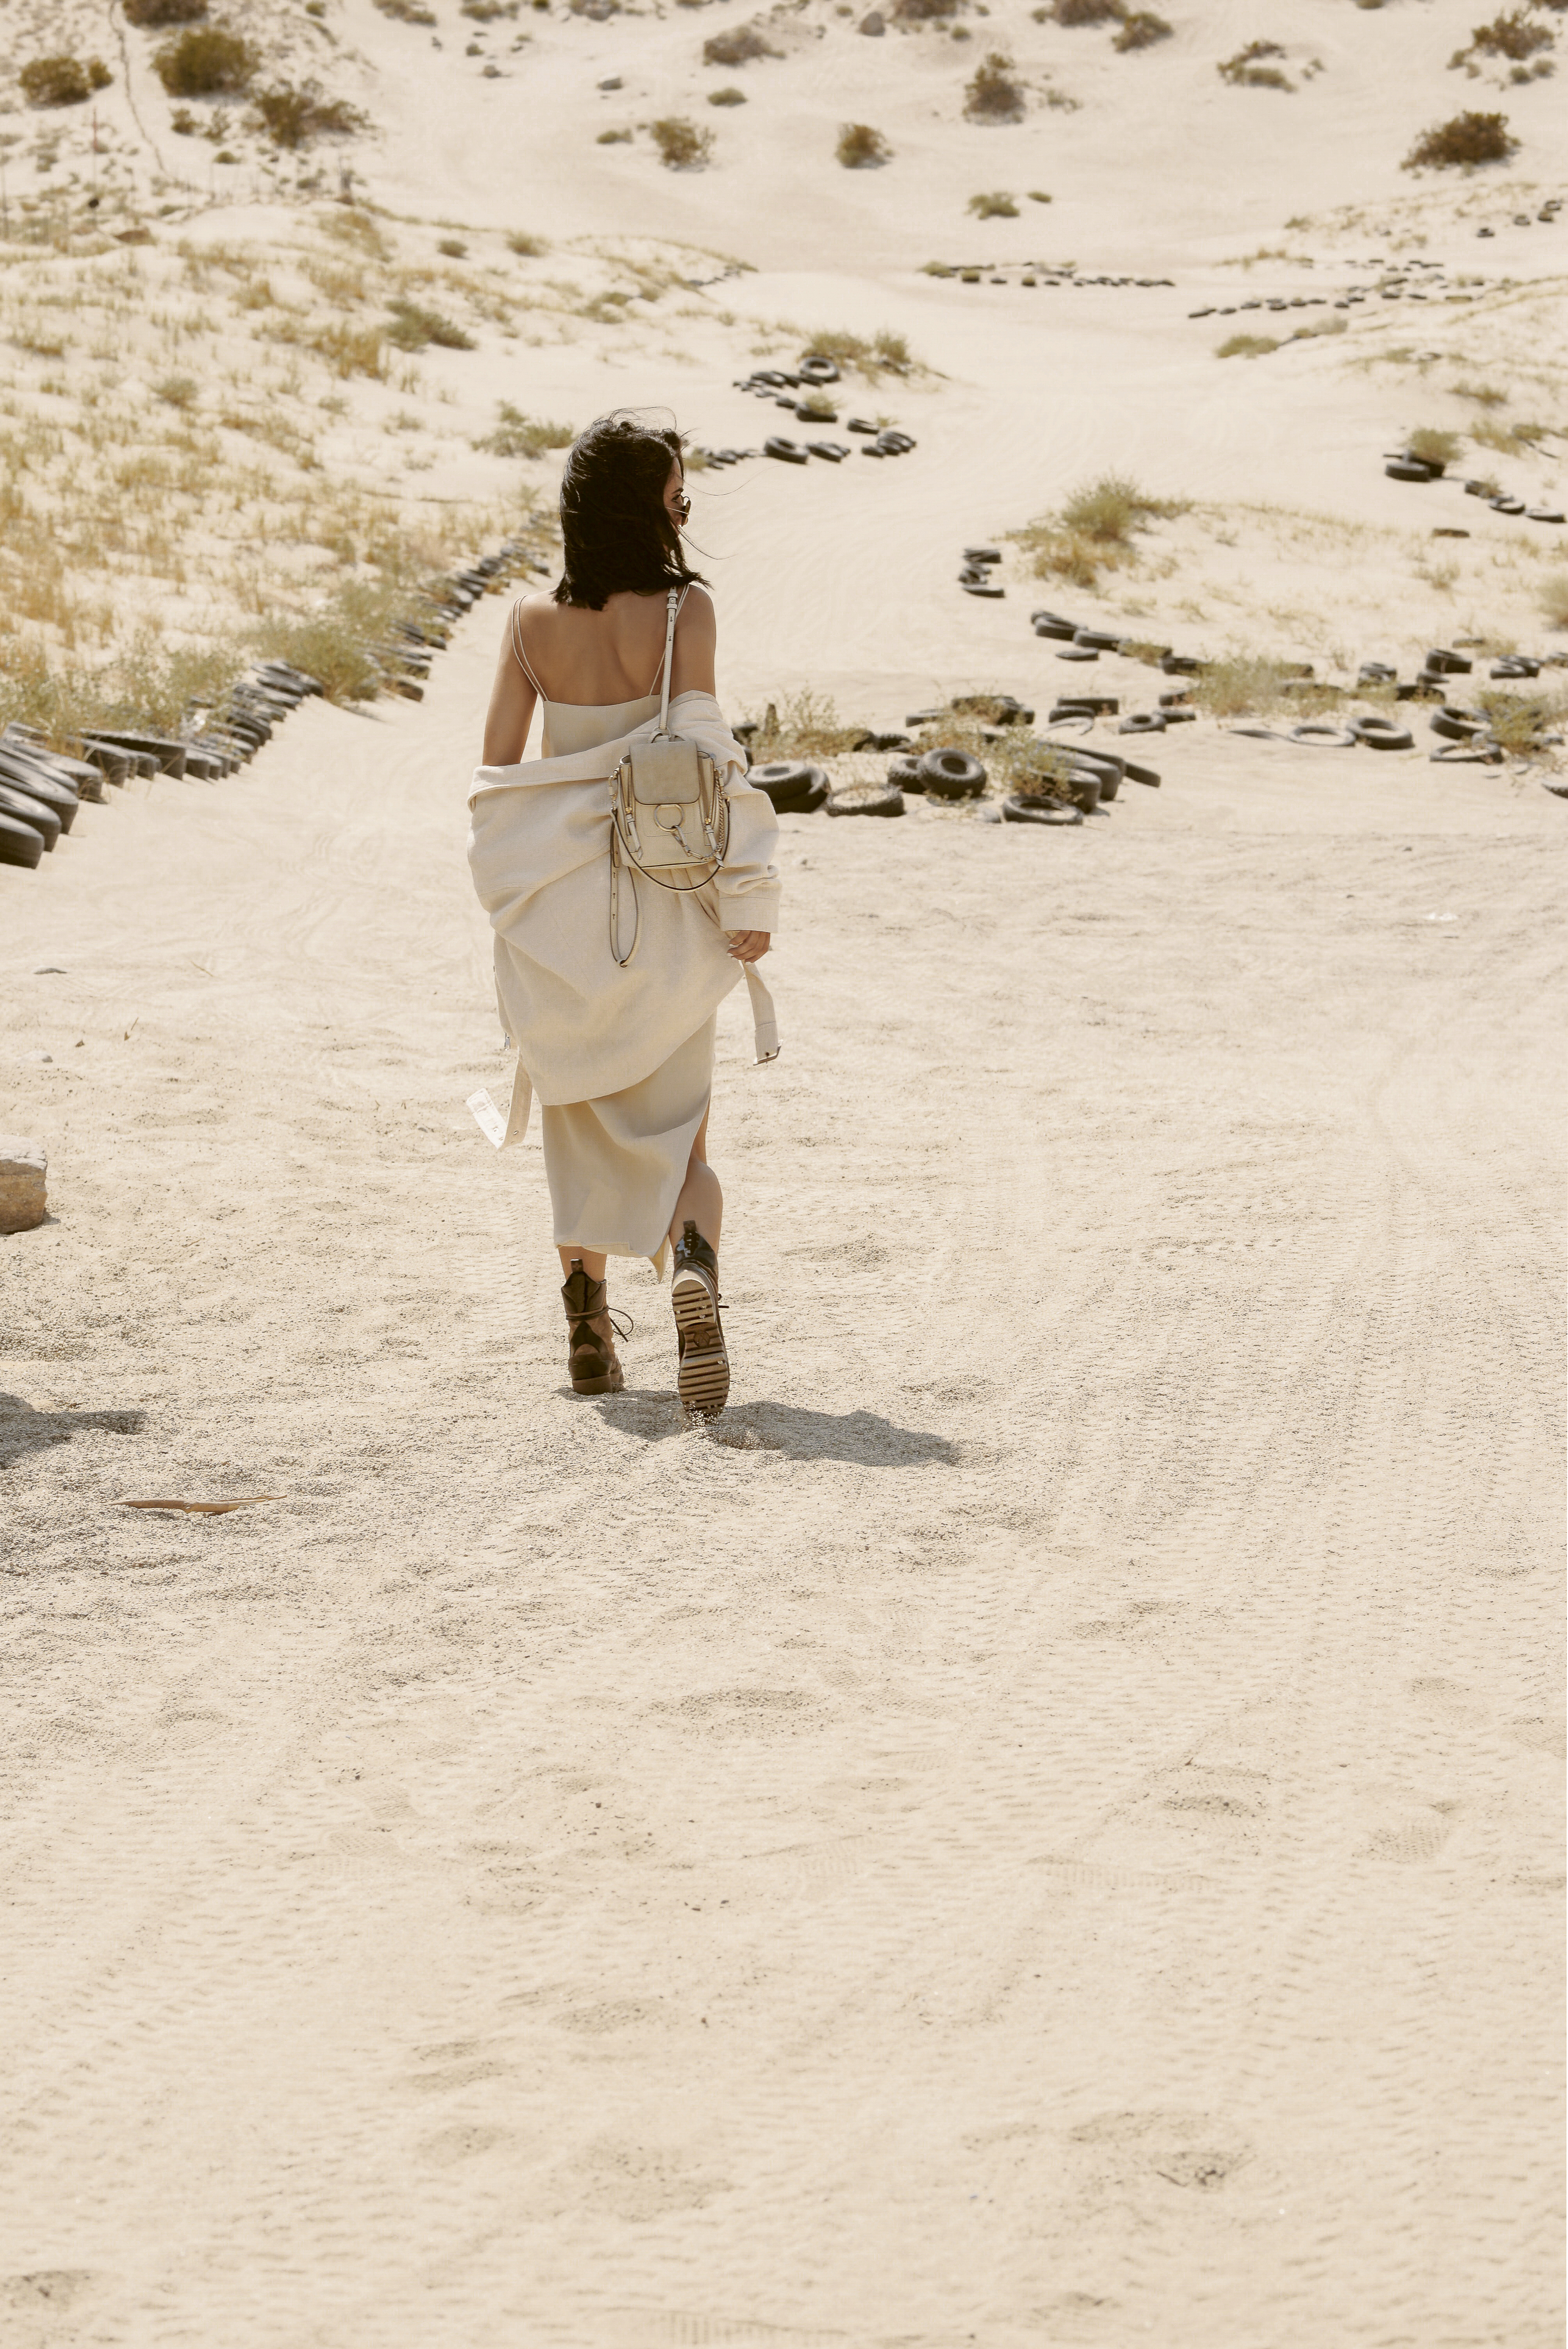 Desert Wanderer - Tania Sarin